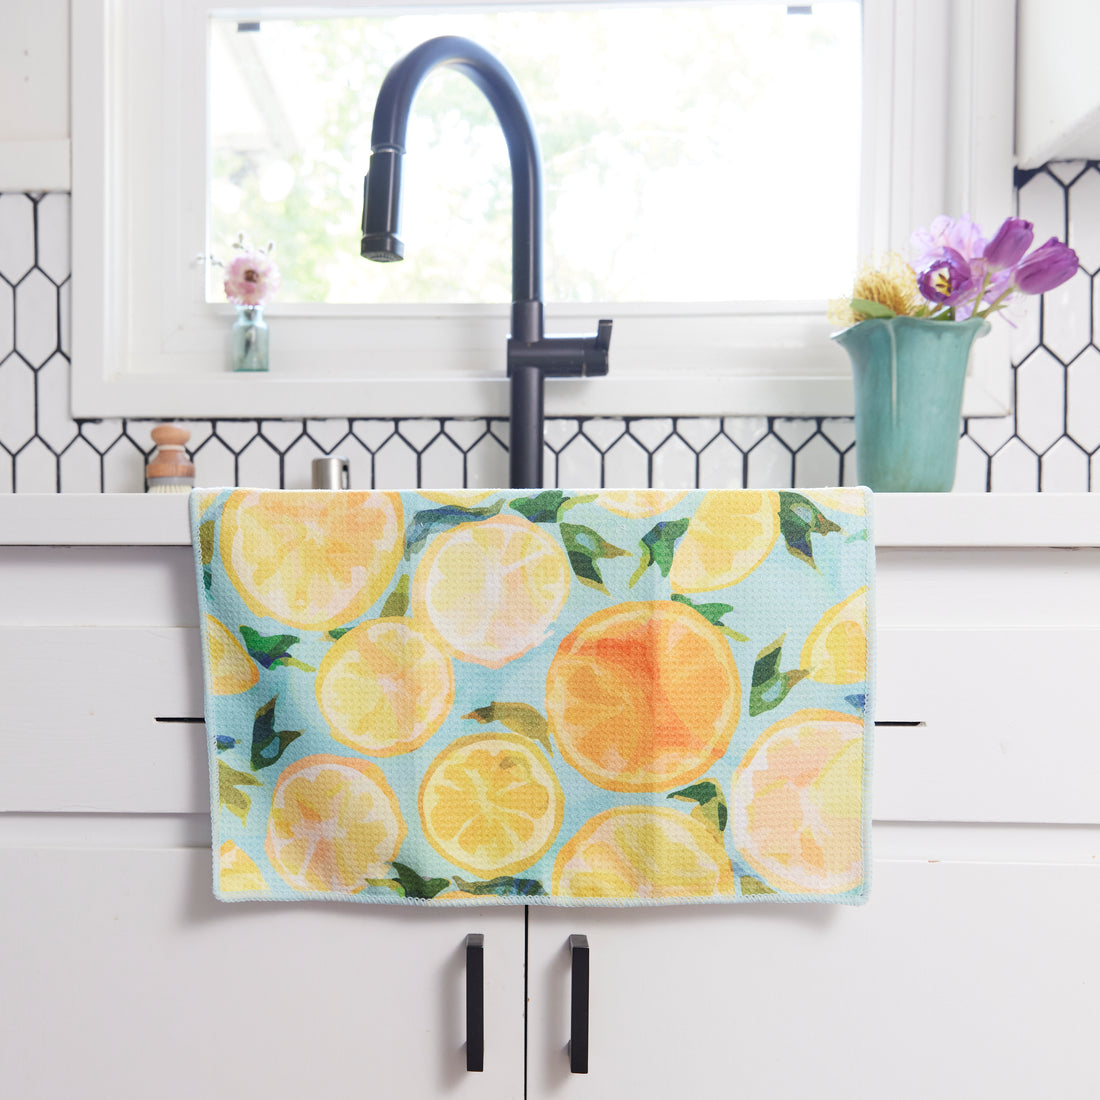 Lemon Slices blu Kitchen Tea Towel-Double Side Printed Kitchen Towel - rockflowerpaper